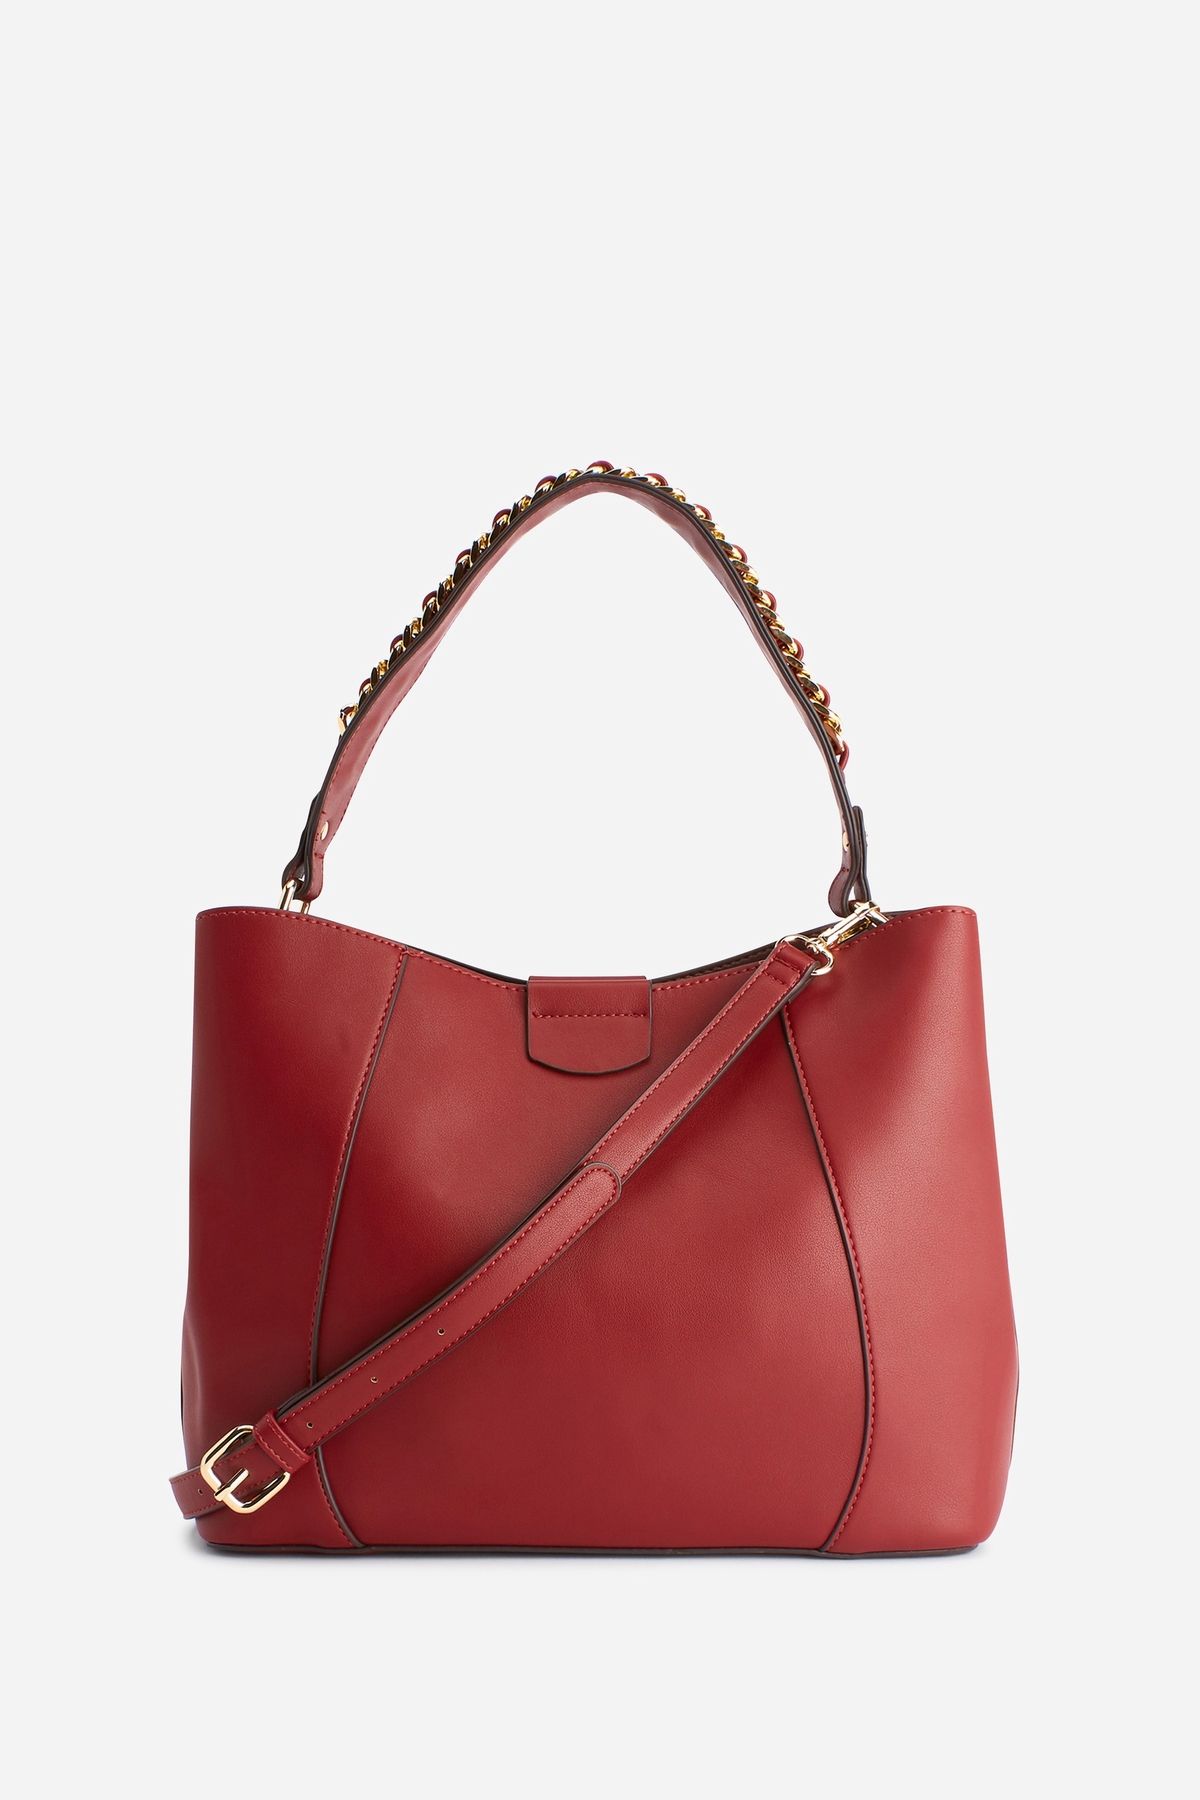 NEXT Tan Brown Faux Leather Bag Handbag Over-body Slouch Messenger Ladies |  eBay